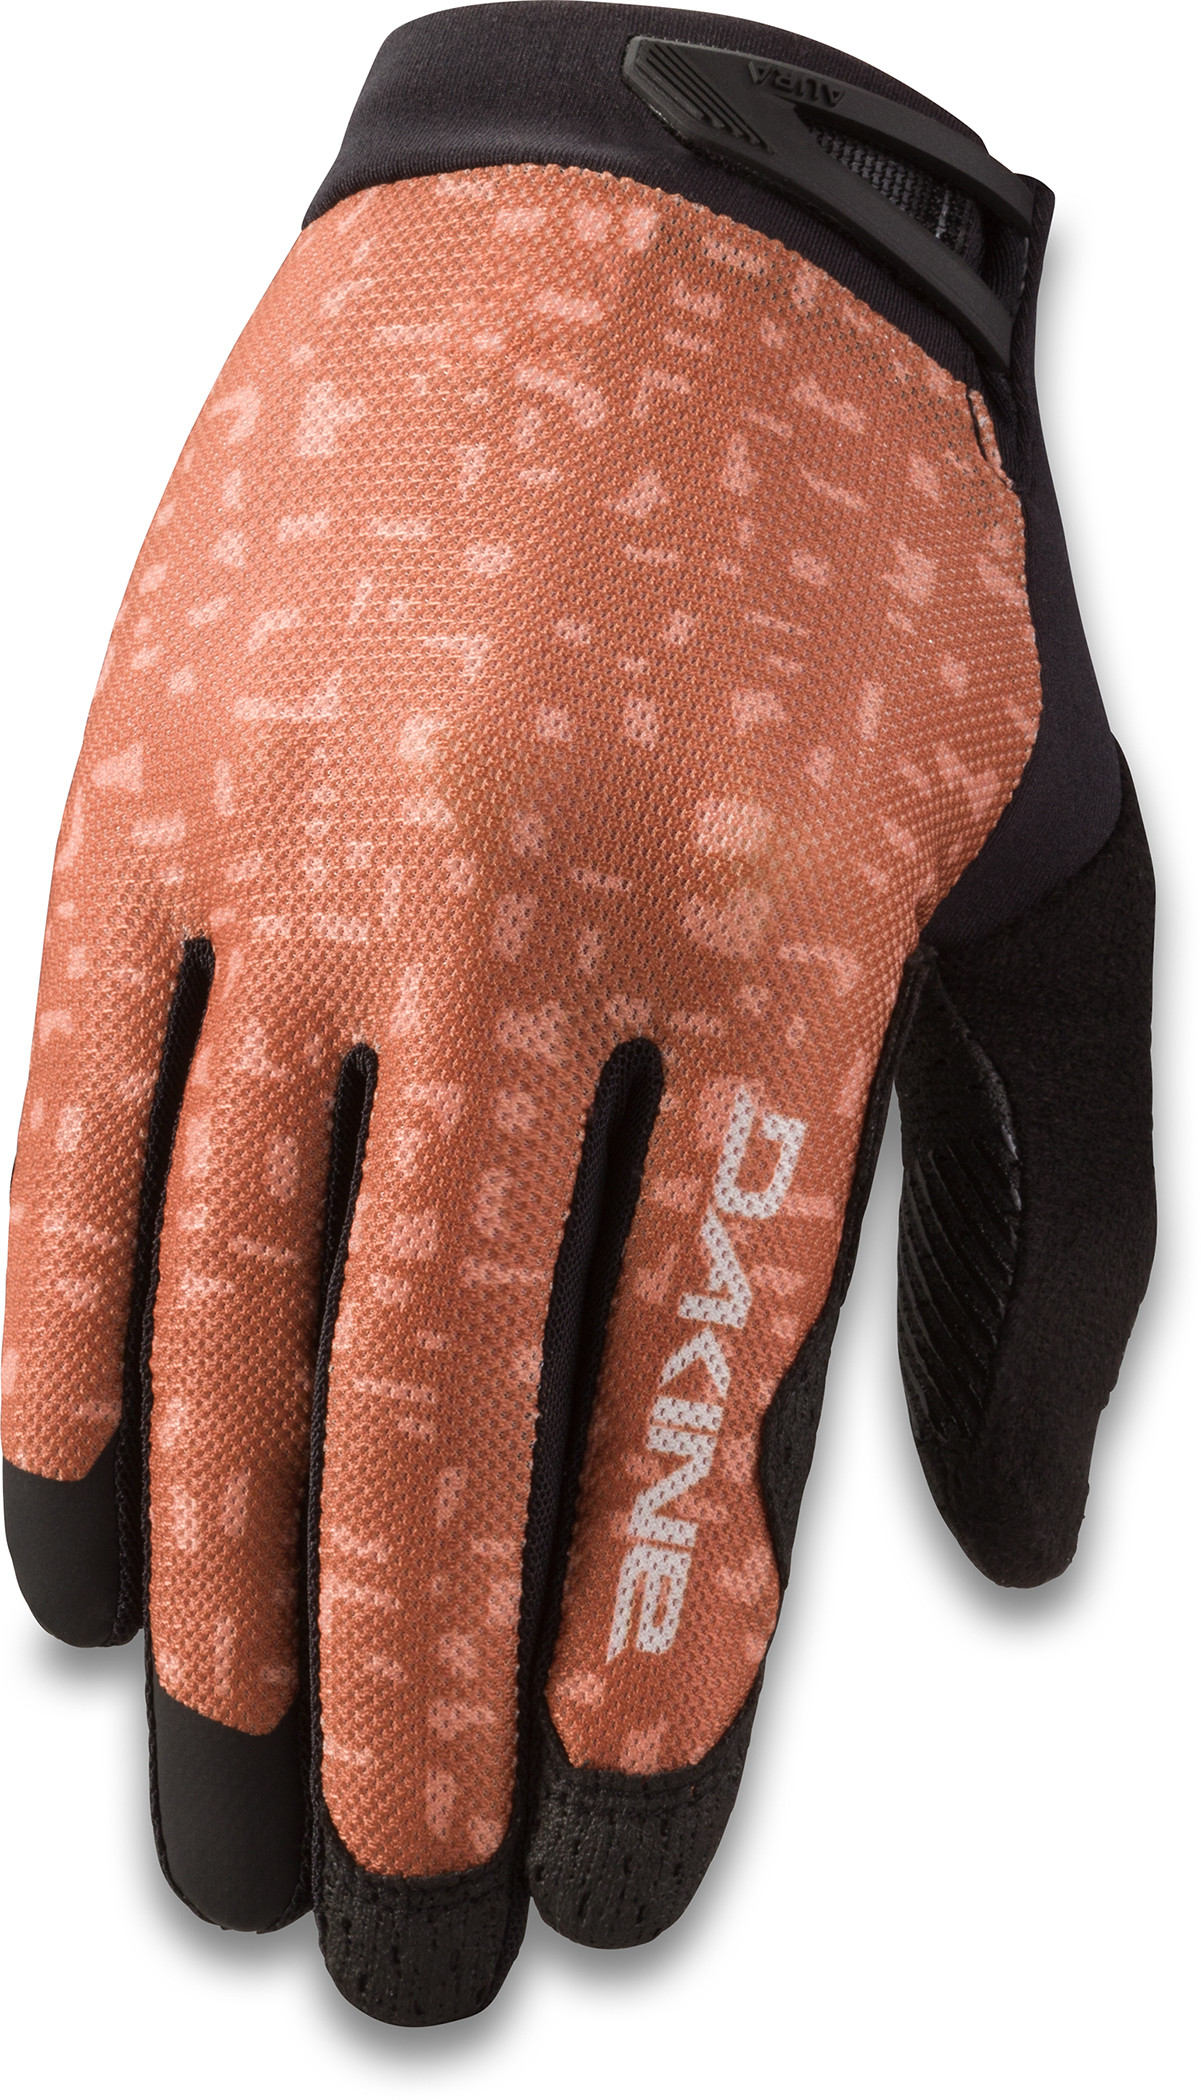 Aura Bike Glove - Women's